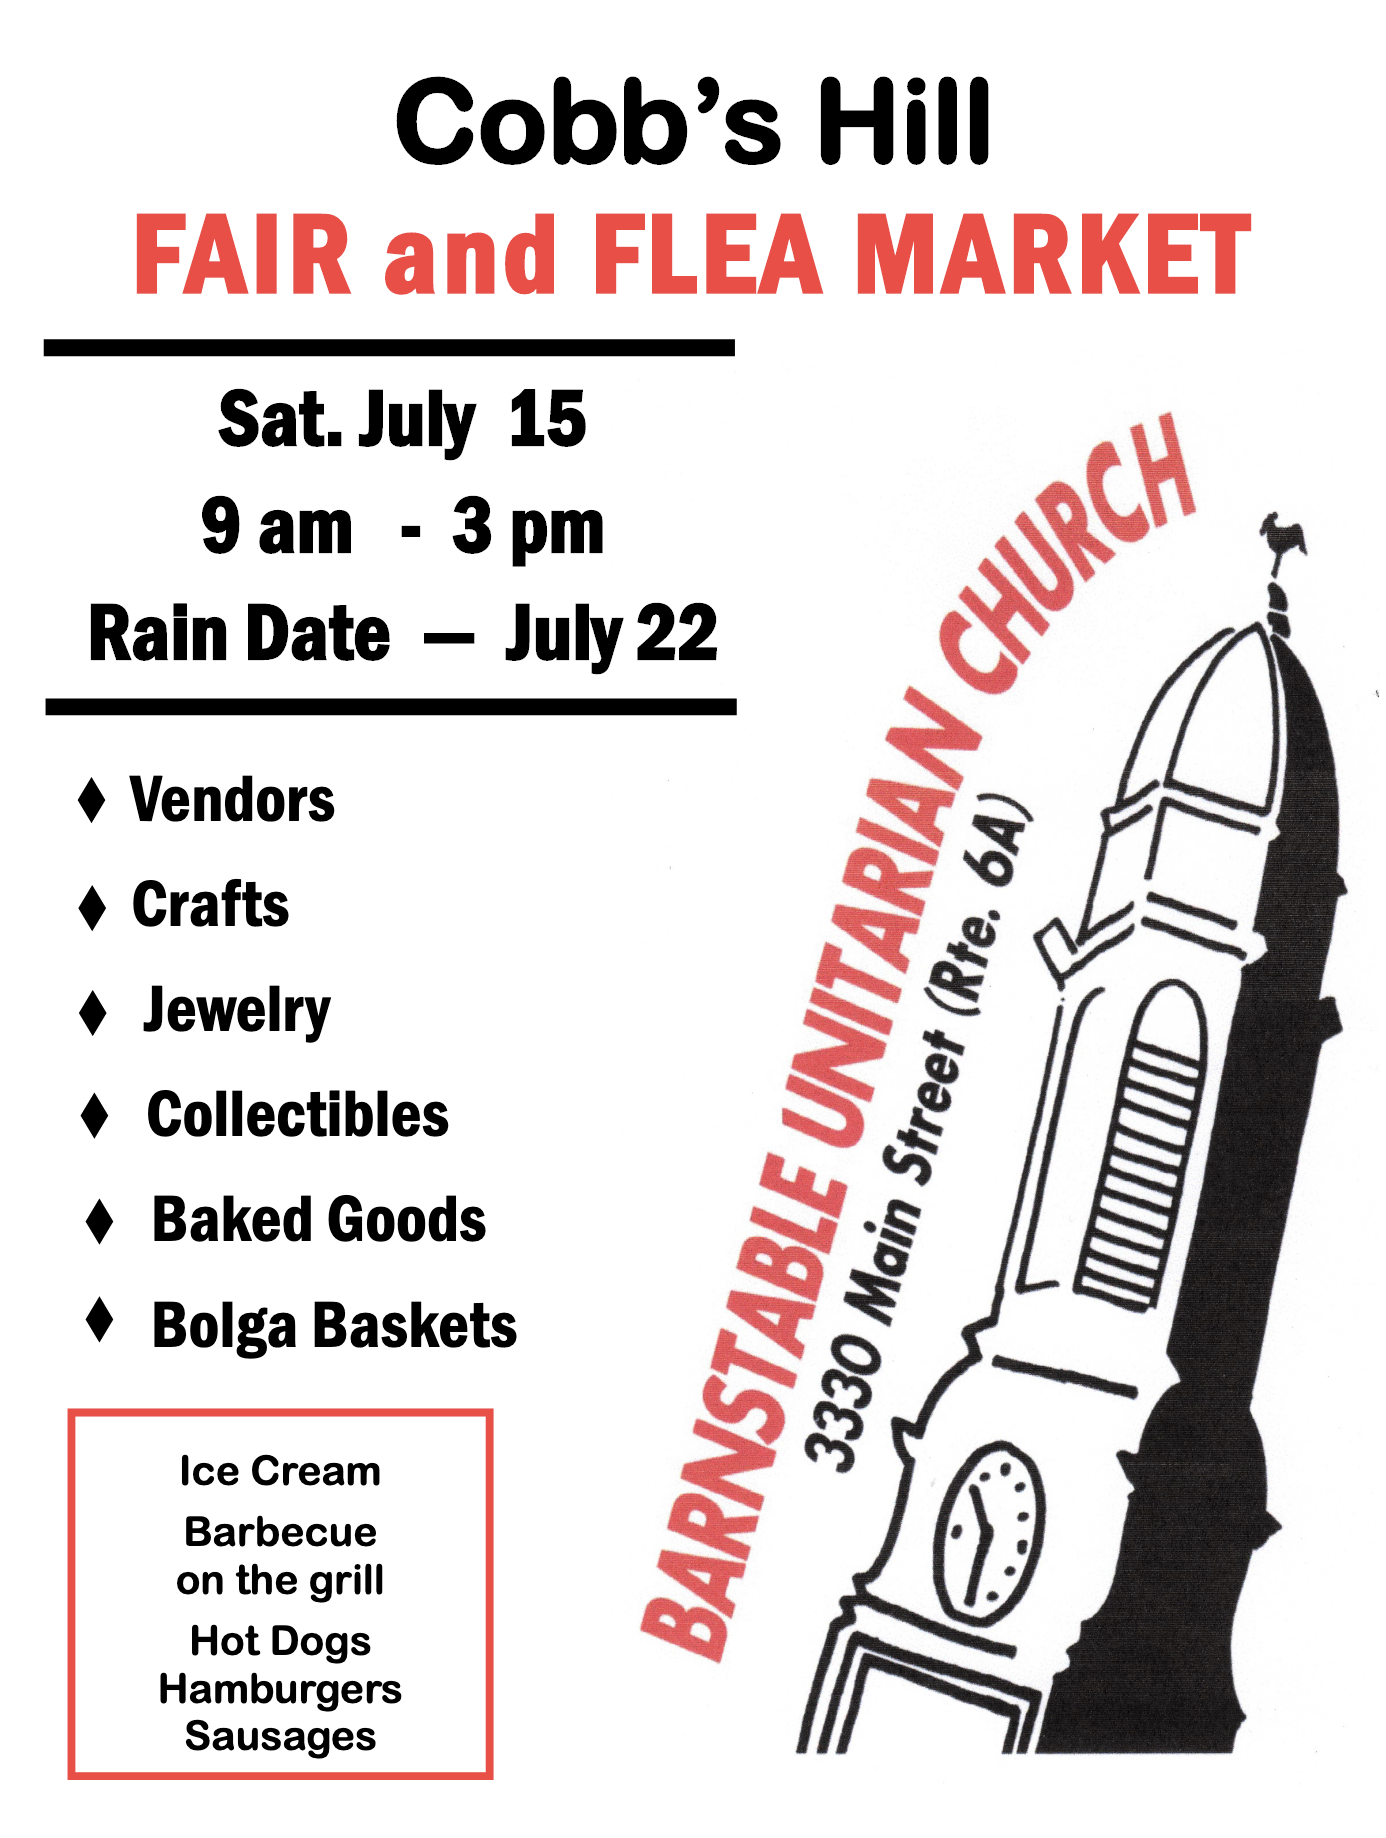 Fair and Flea Market